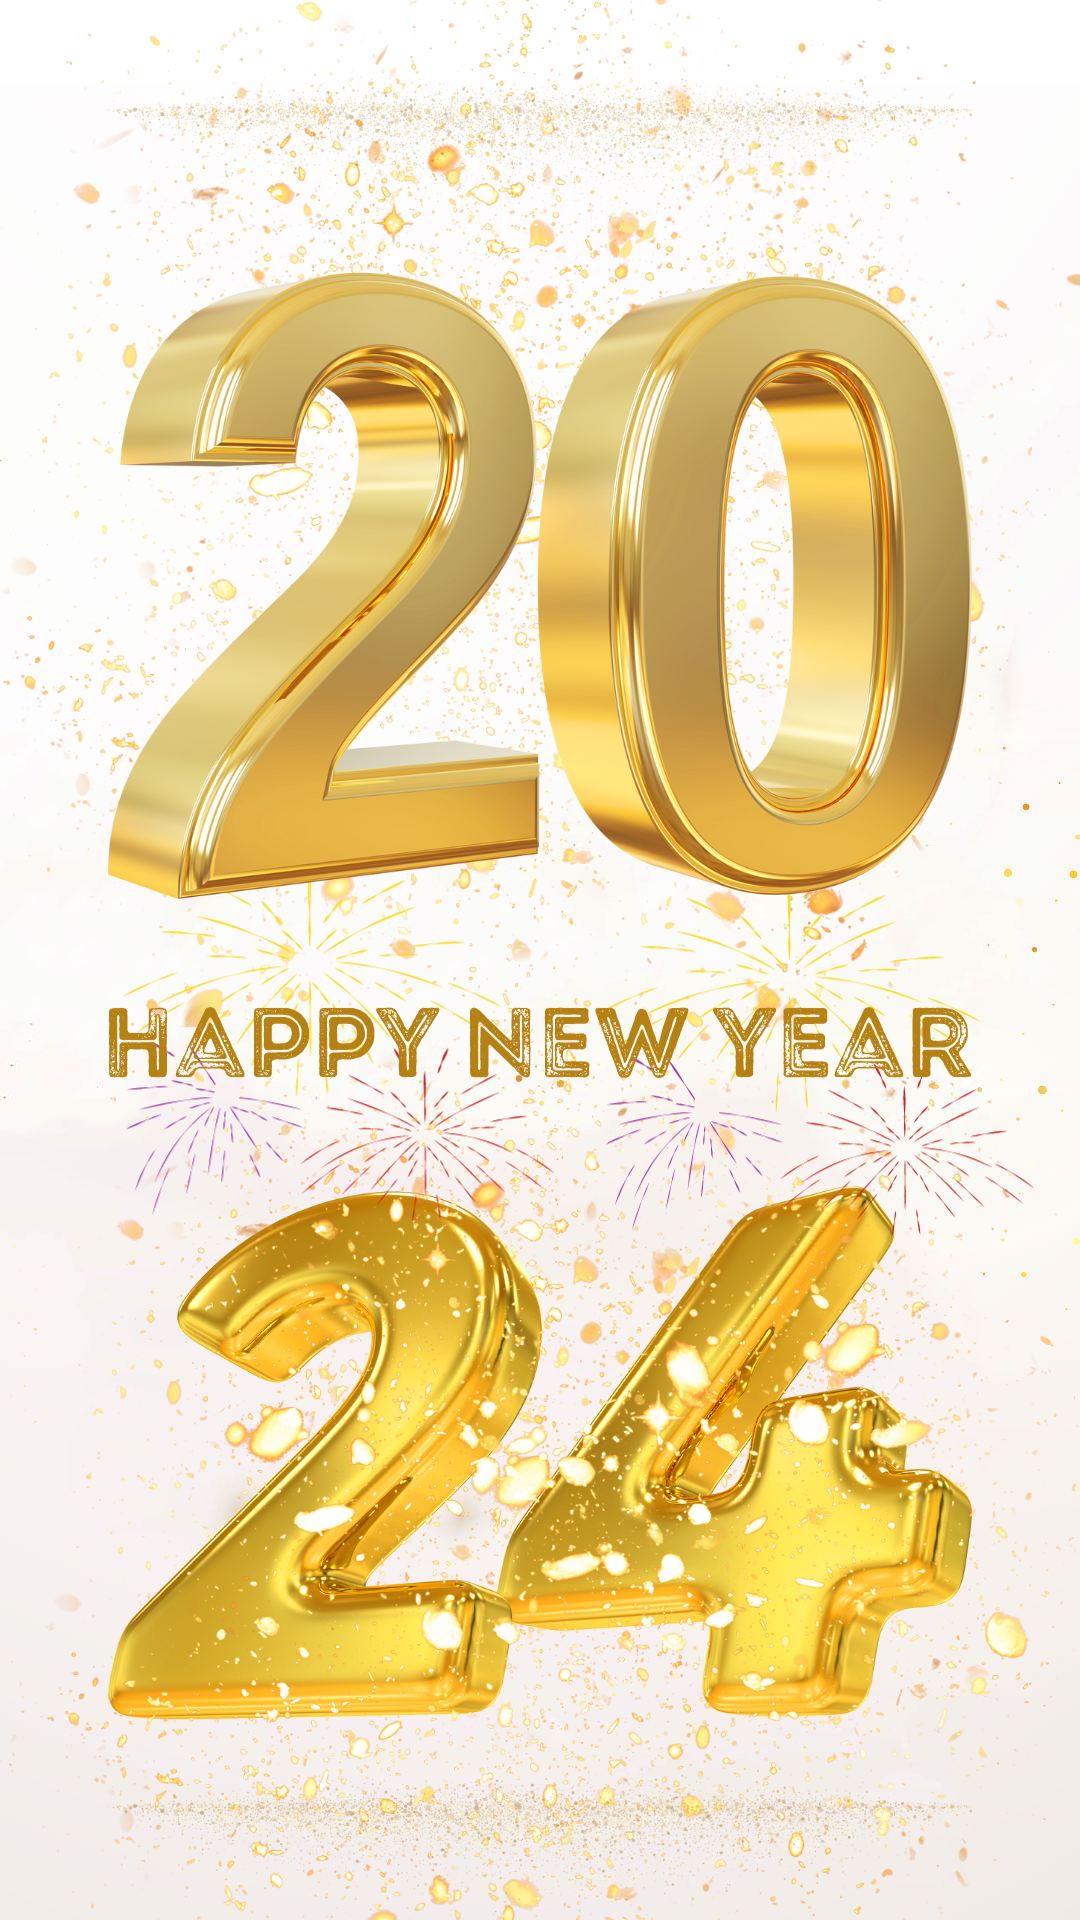 2023 happy new year gold mobile wallpaper hd.jpg